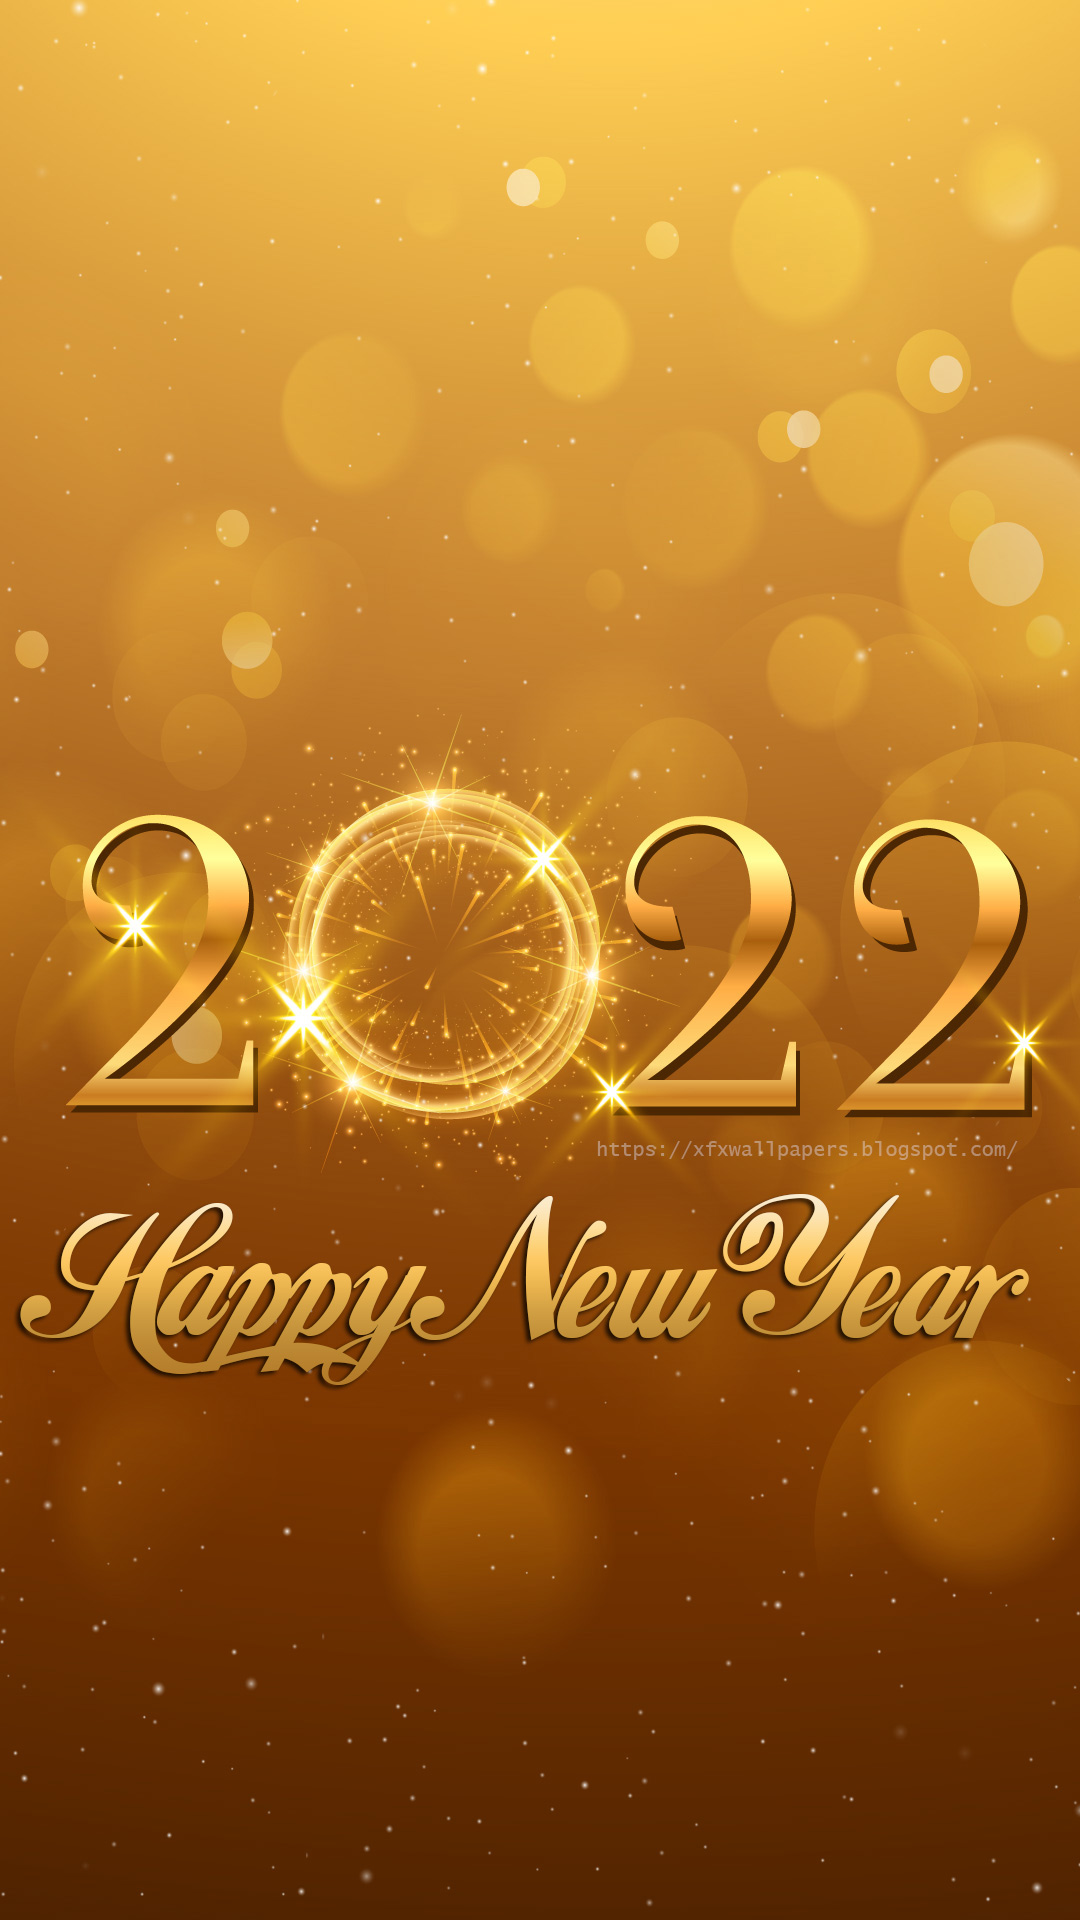 Happy New Year 2022 Golden Wallpapers